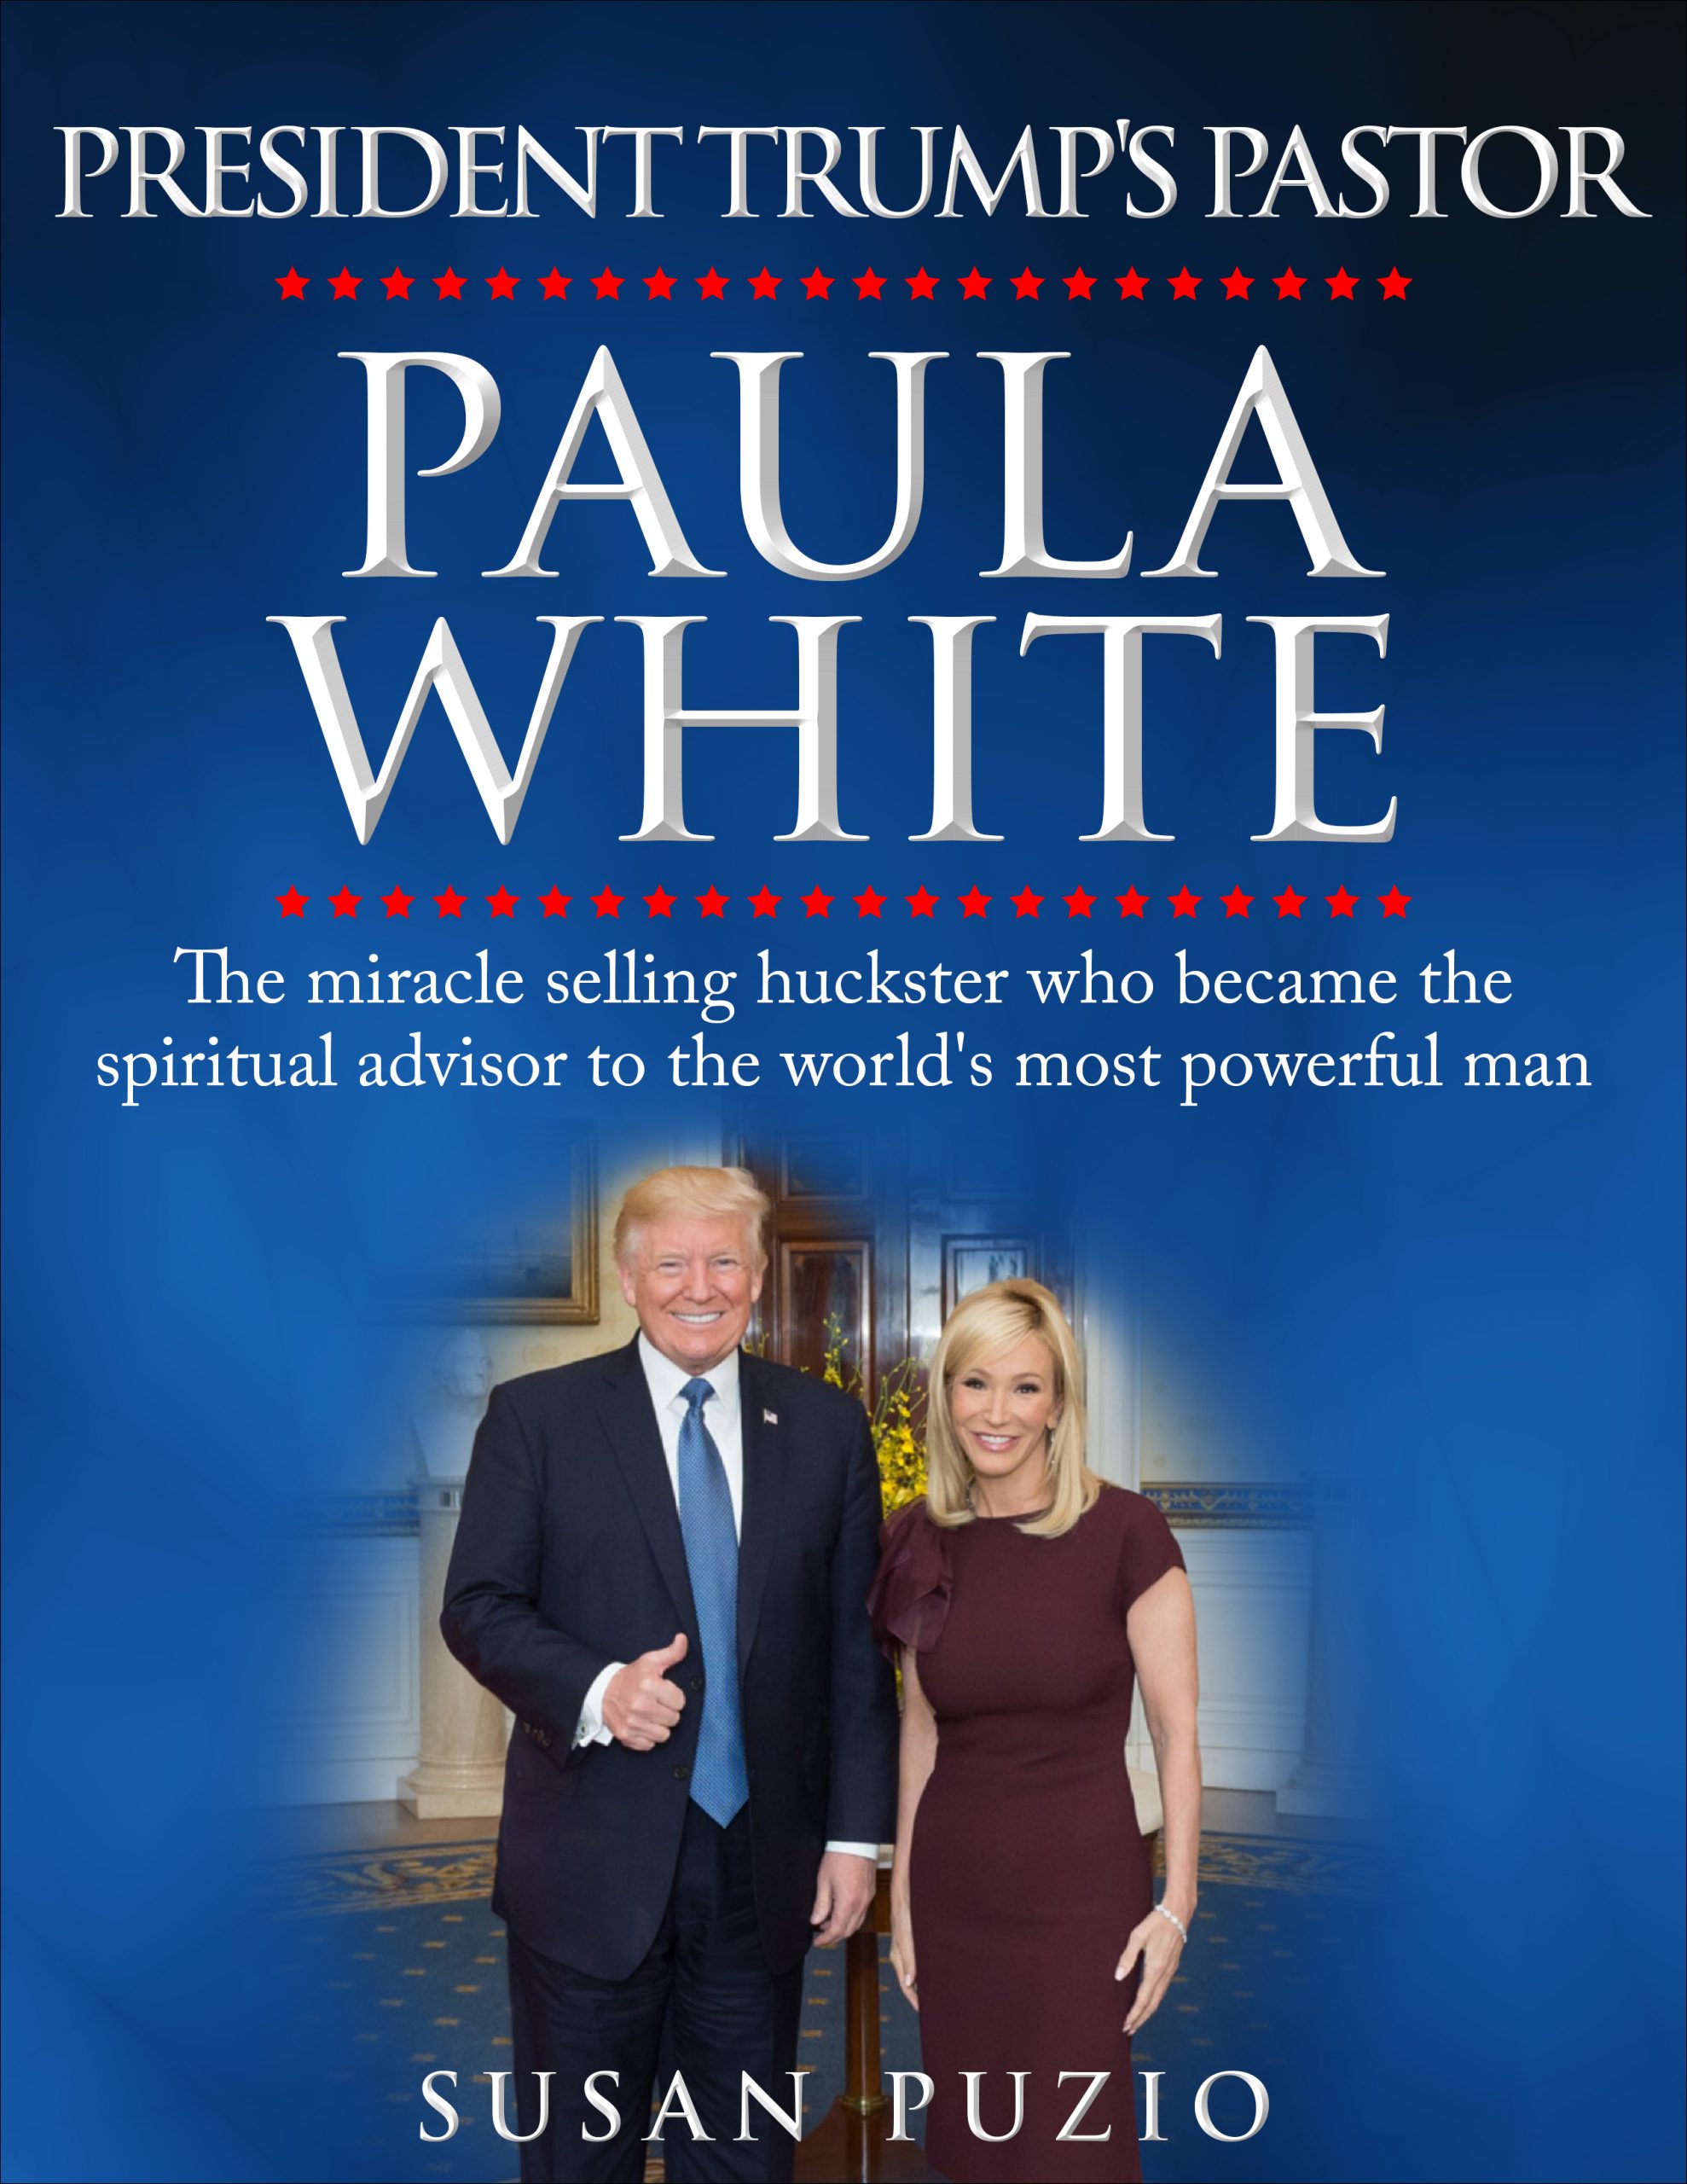 Read -President Trump’s Pastor-Paula White available on Amazon